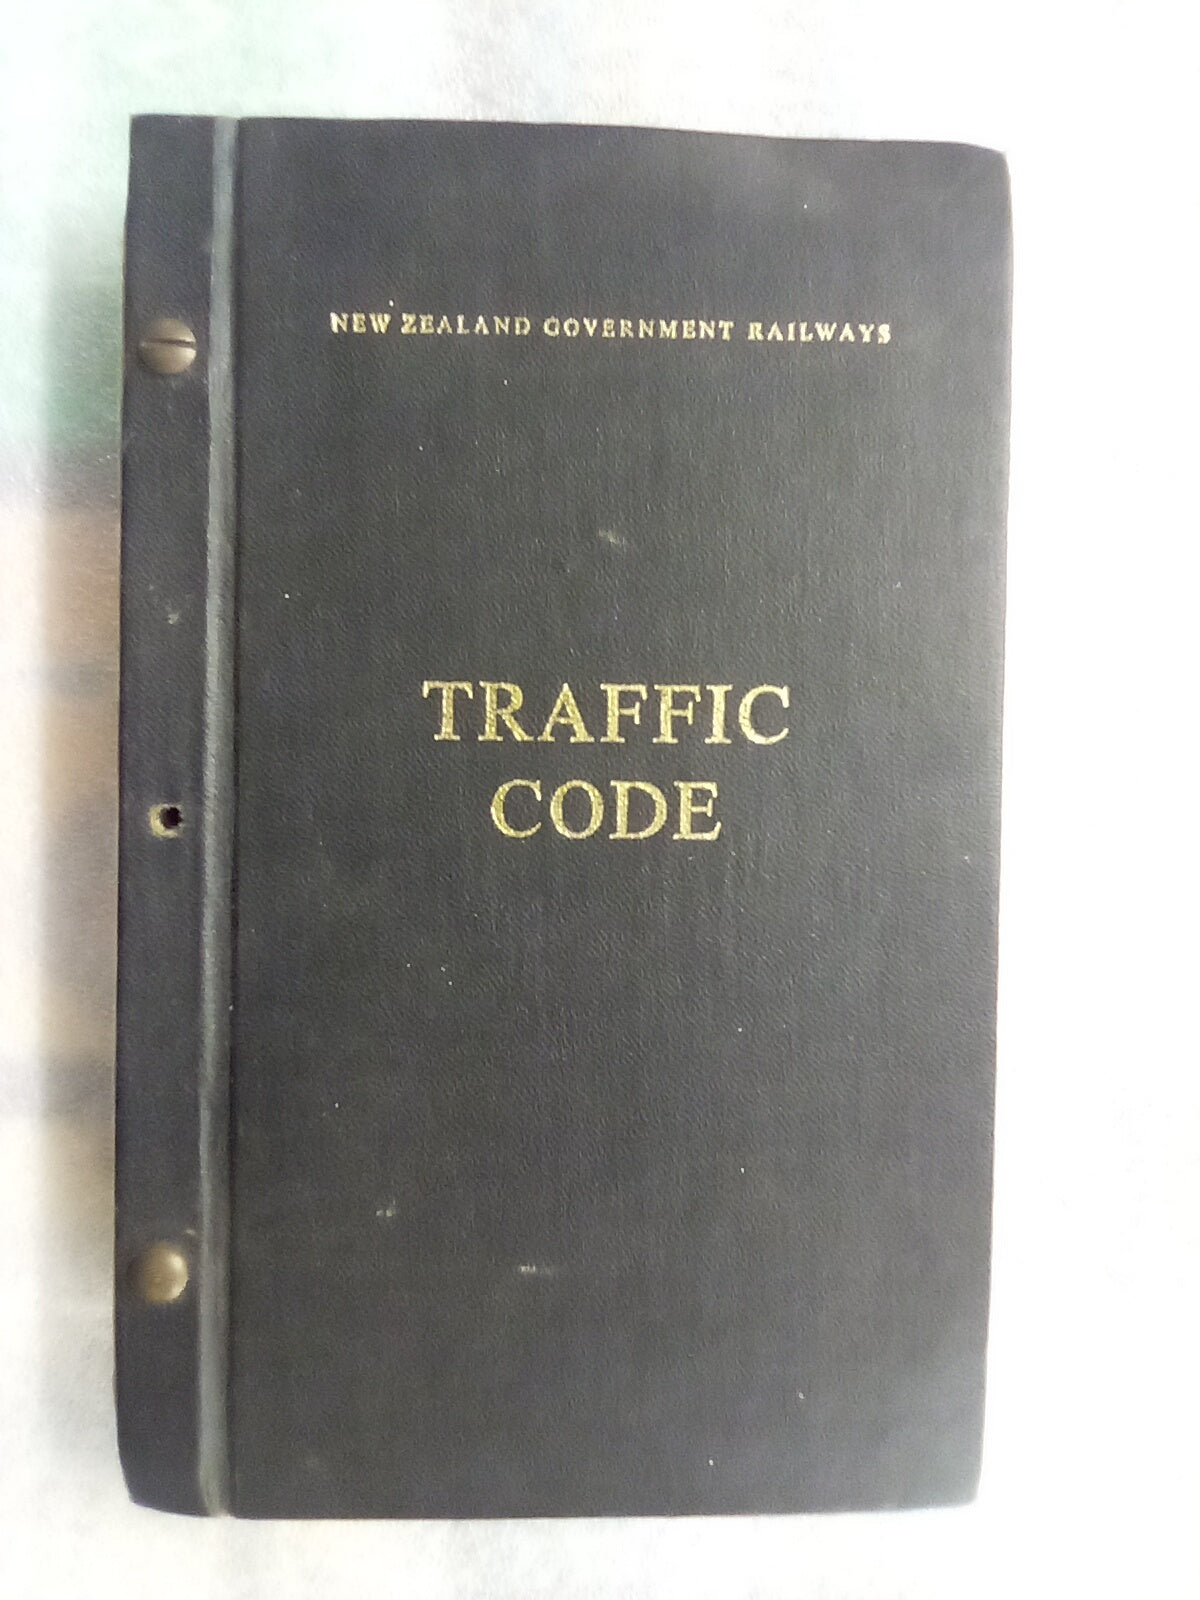 NZ Government Railways Traffic Code (1980)